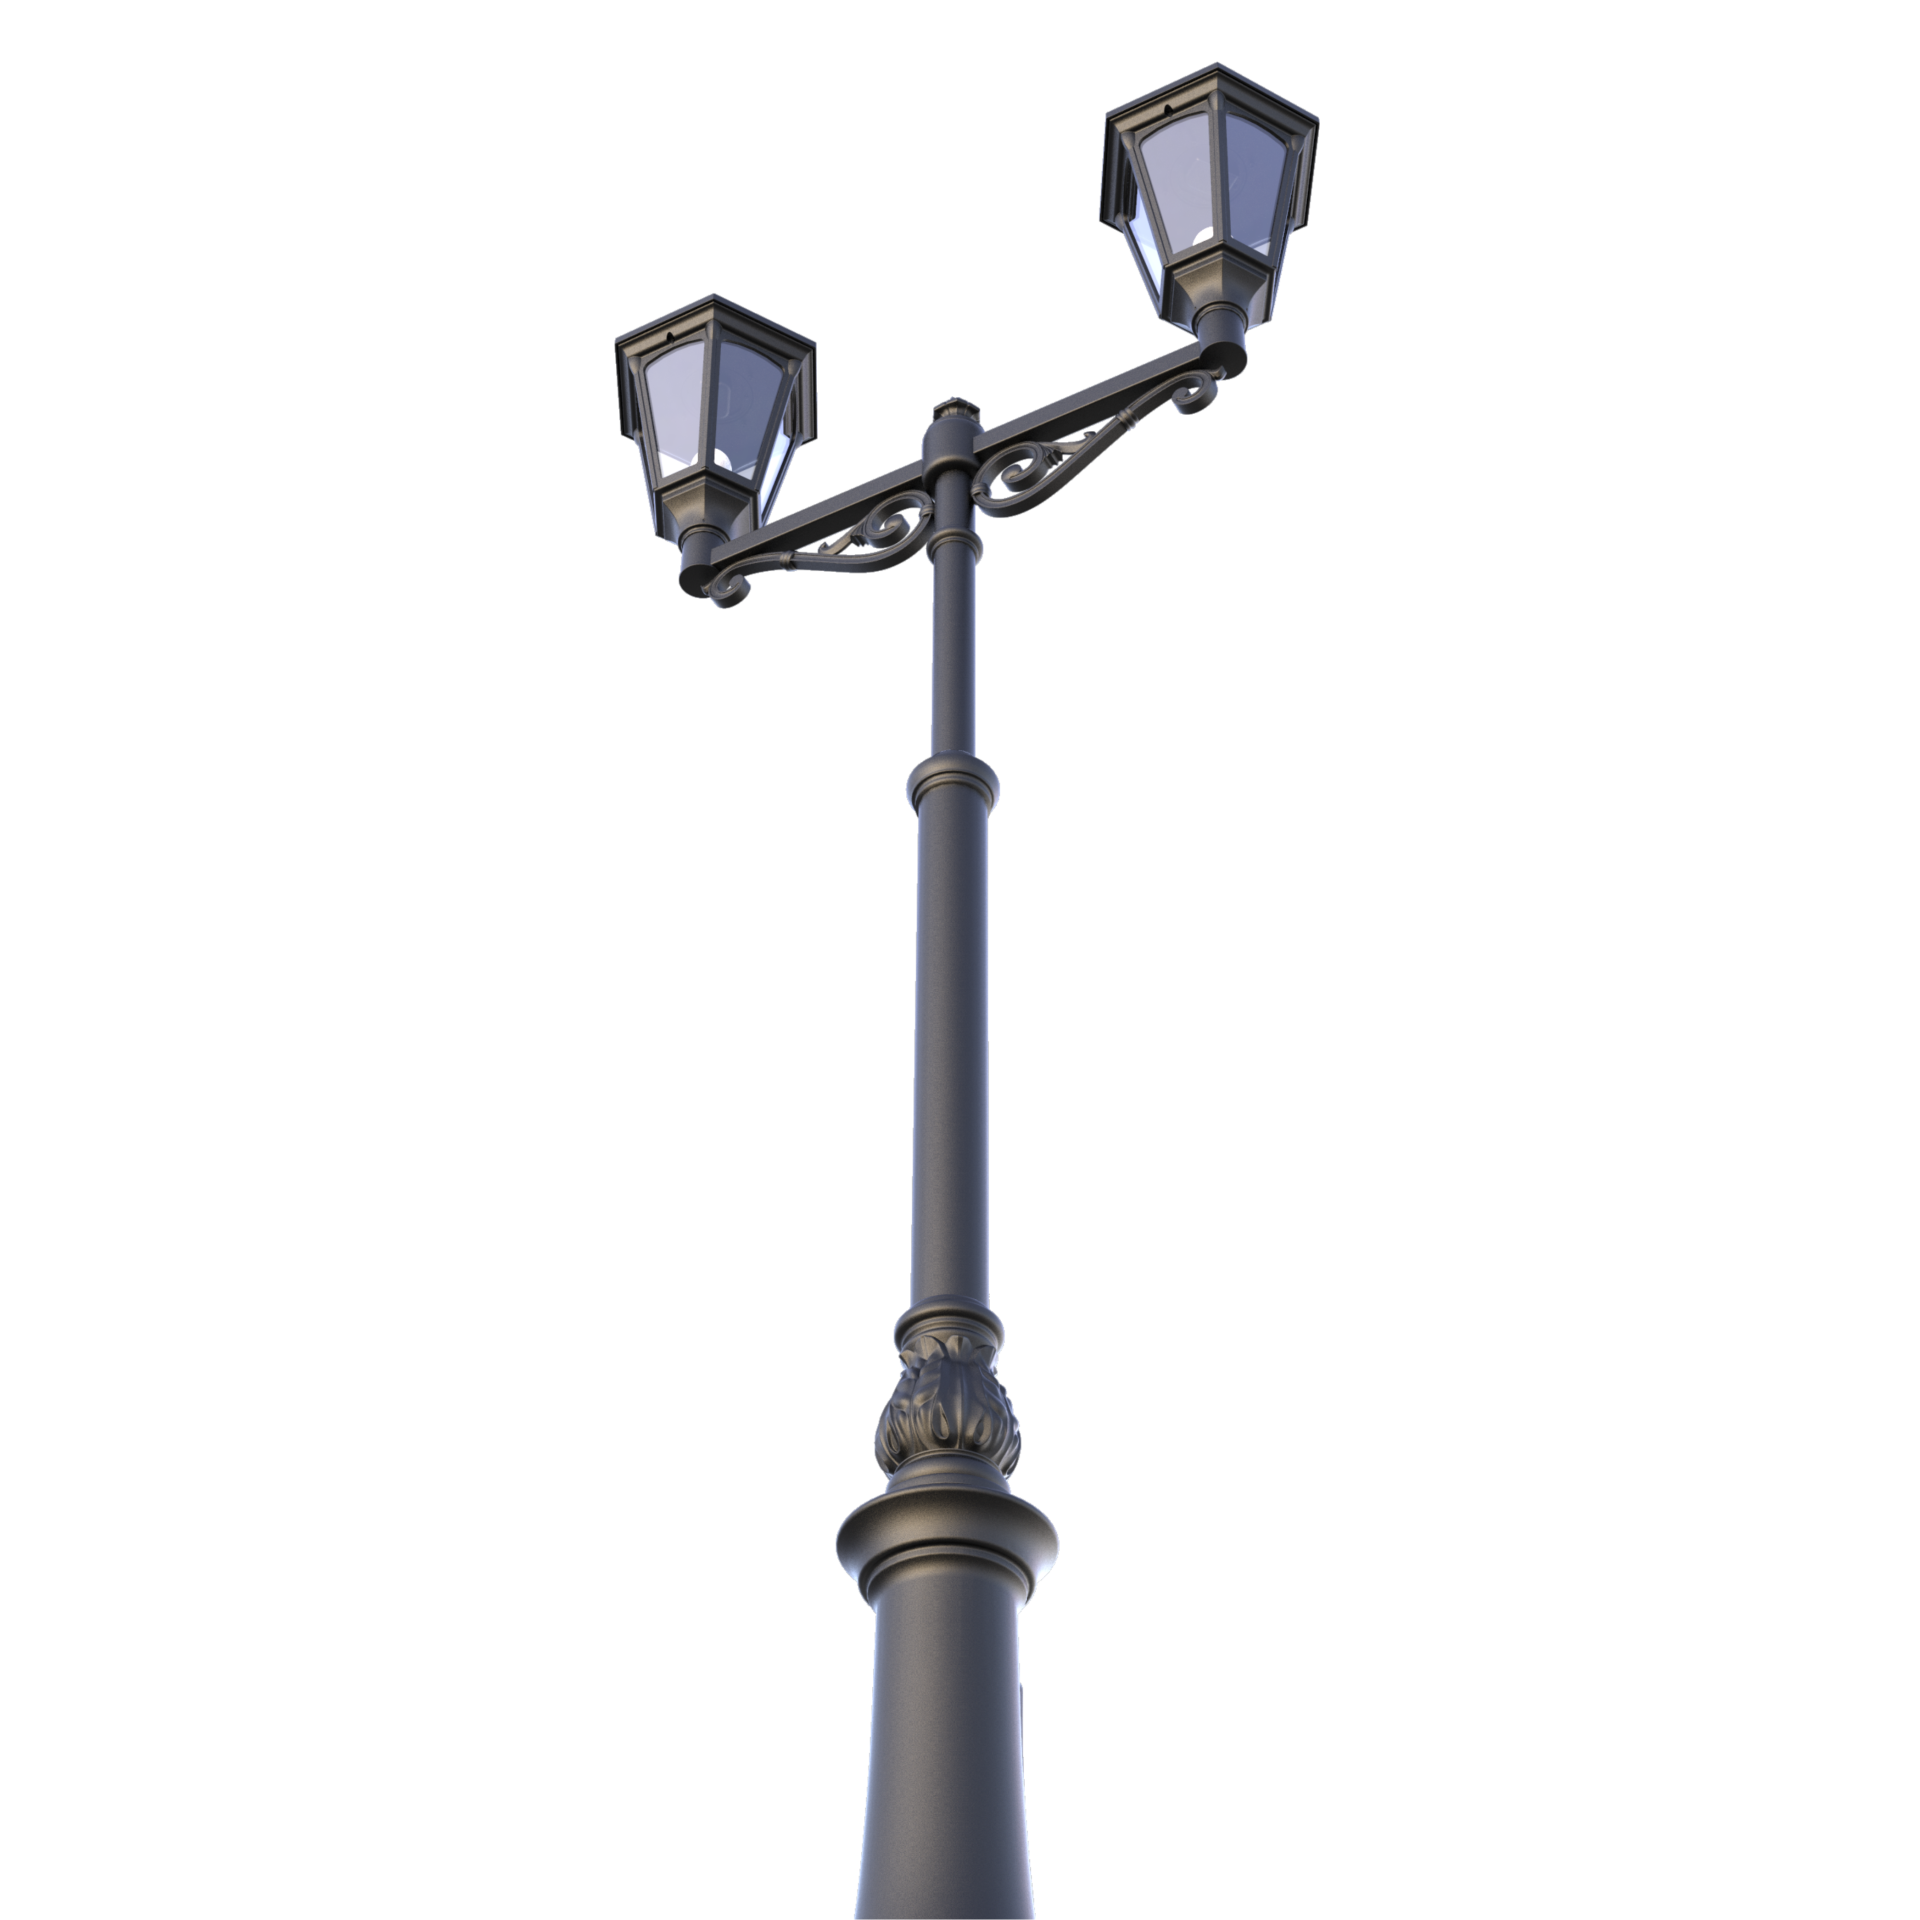 PARKGLOW LIGHTING POLE Ornamental Cast Iron Park Lantern on Decorative Pole